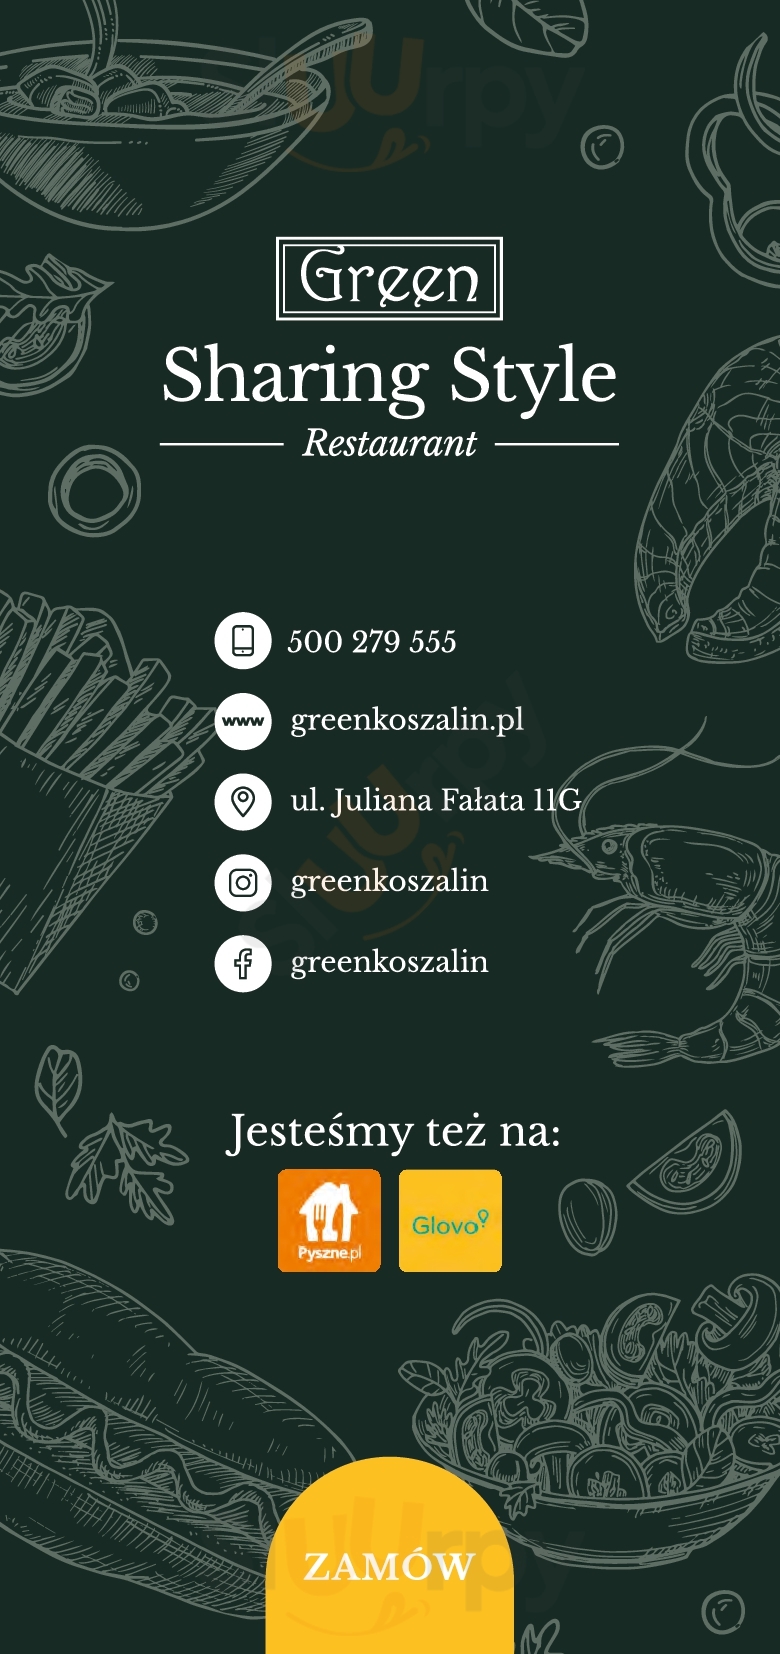 Green Pub Sharing Style Restaurant Koszalin Menu - 1